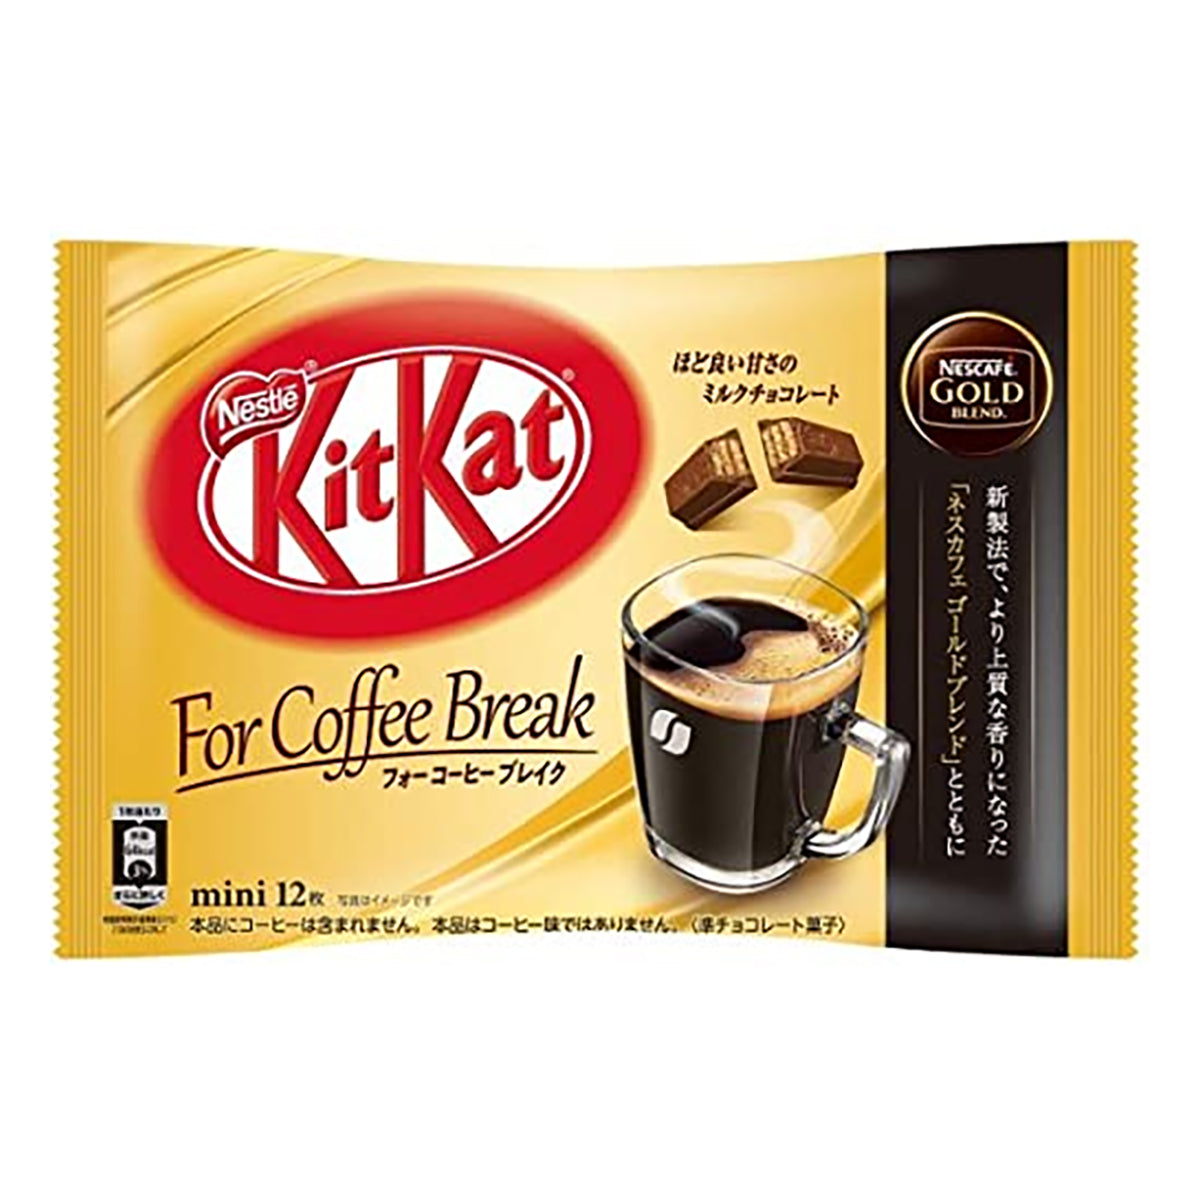 kit kat coffee break wafer biscuit - 135g